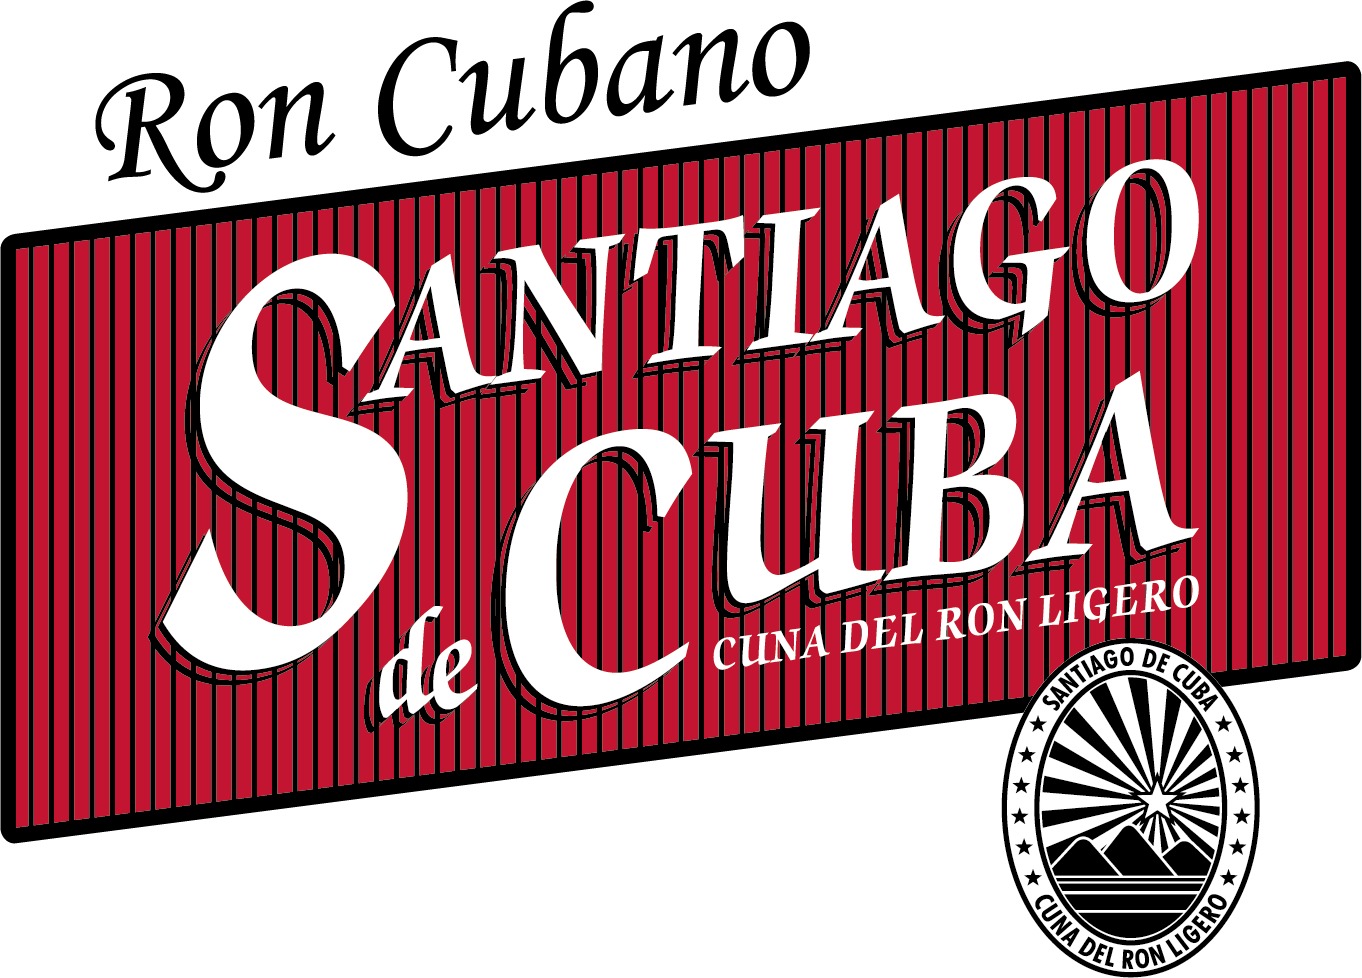 Santiago de Cuba logo